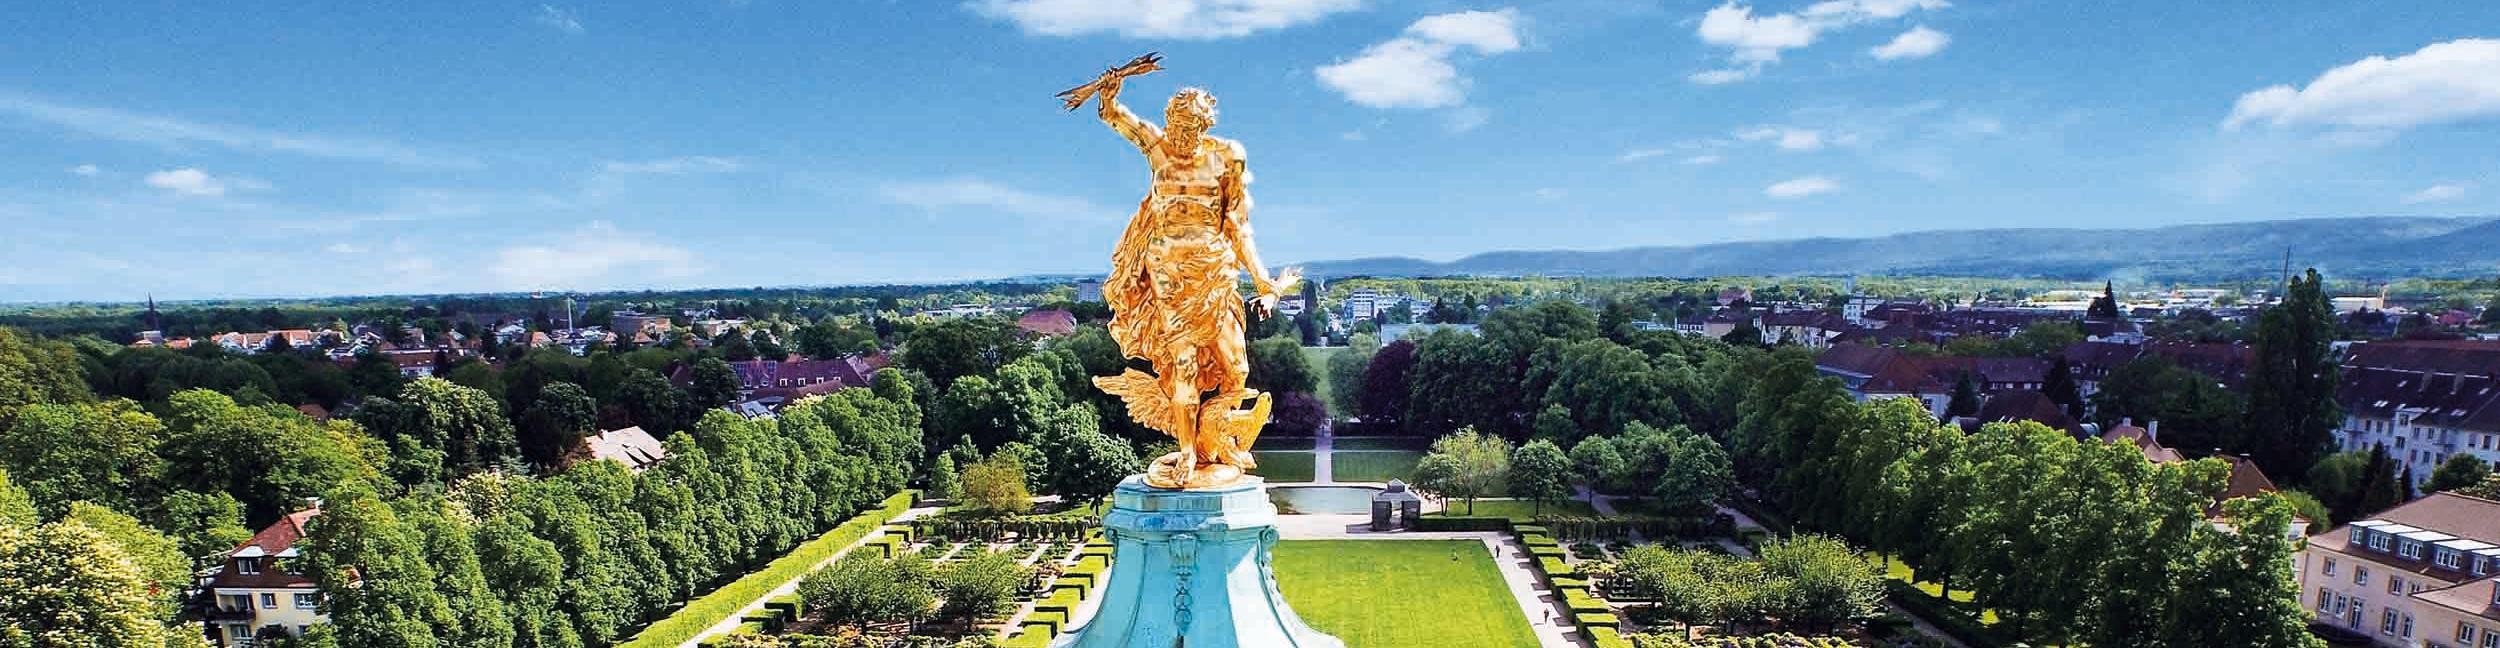 L'homme d'or du château de Rastatt.